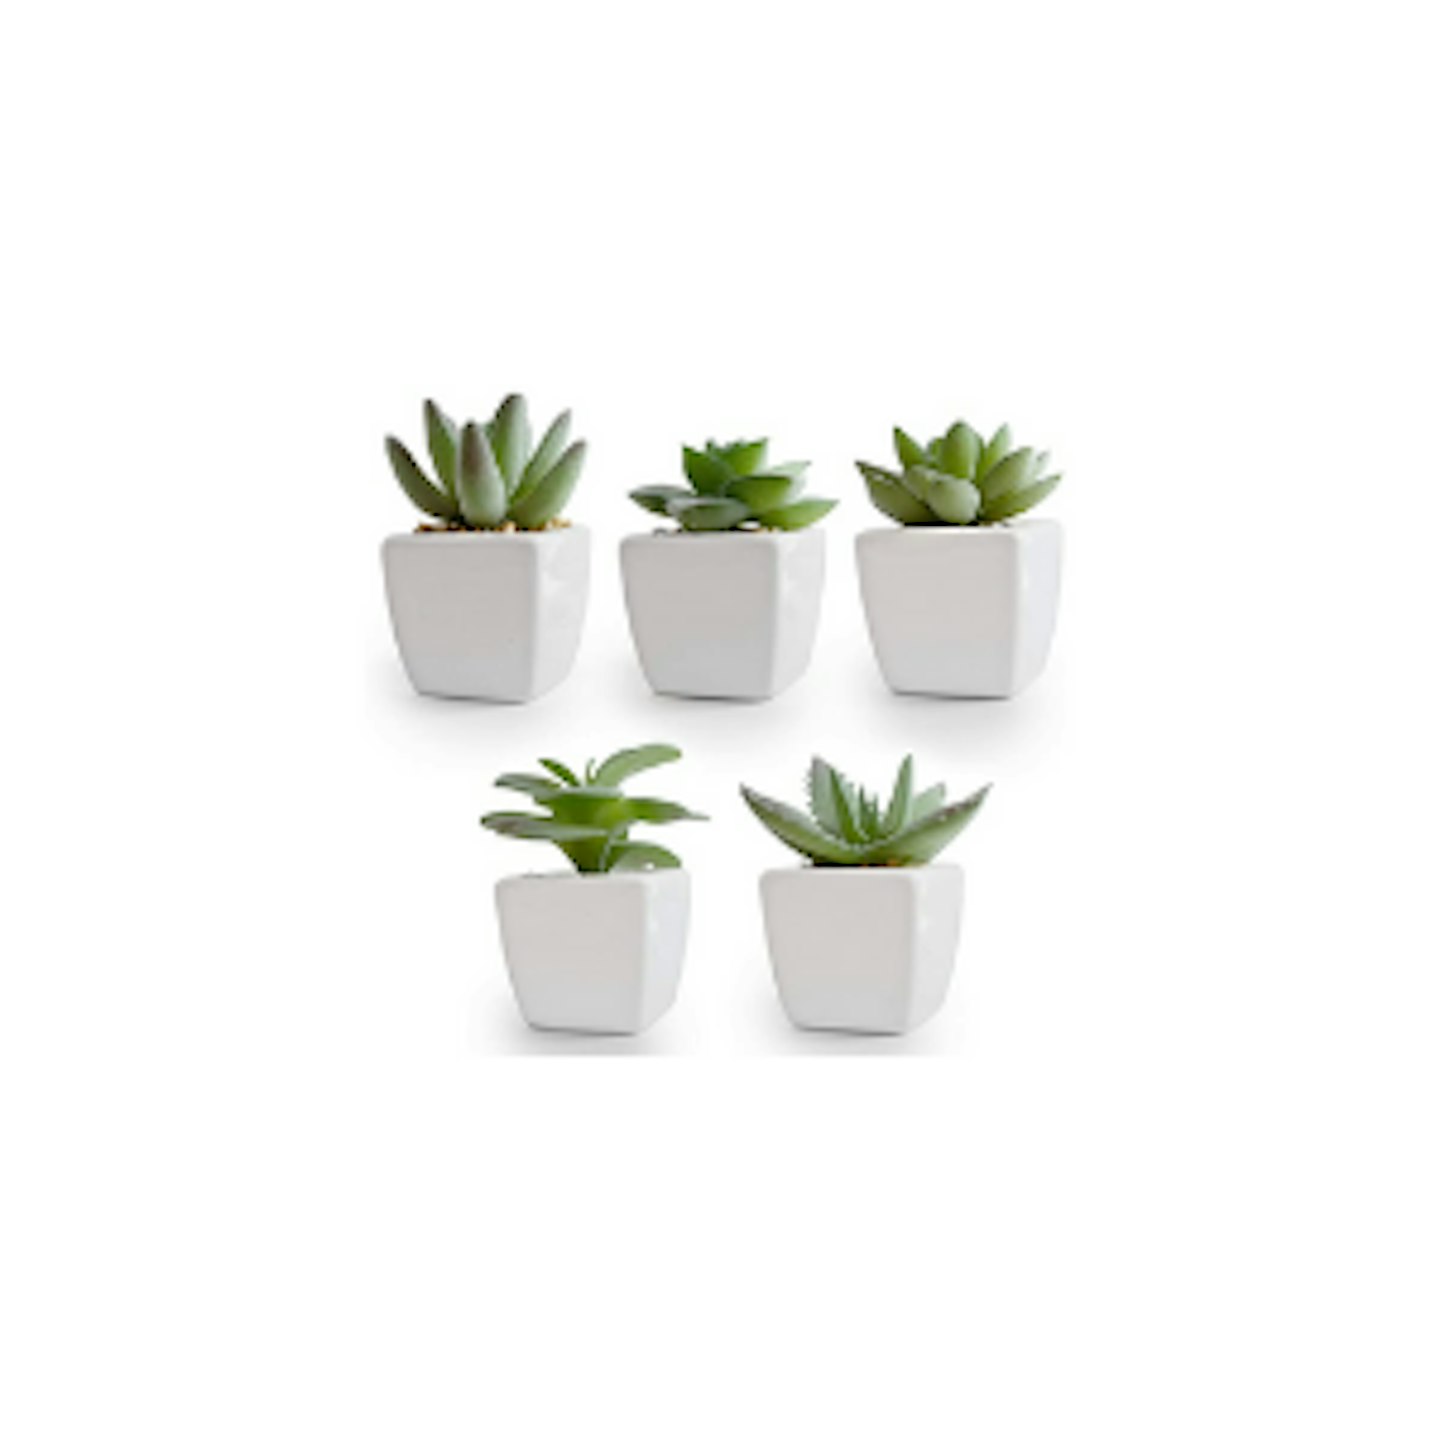 Korvea Set of 5 Artificial Succulent Plants in Ceramic Pots